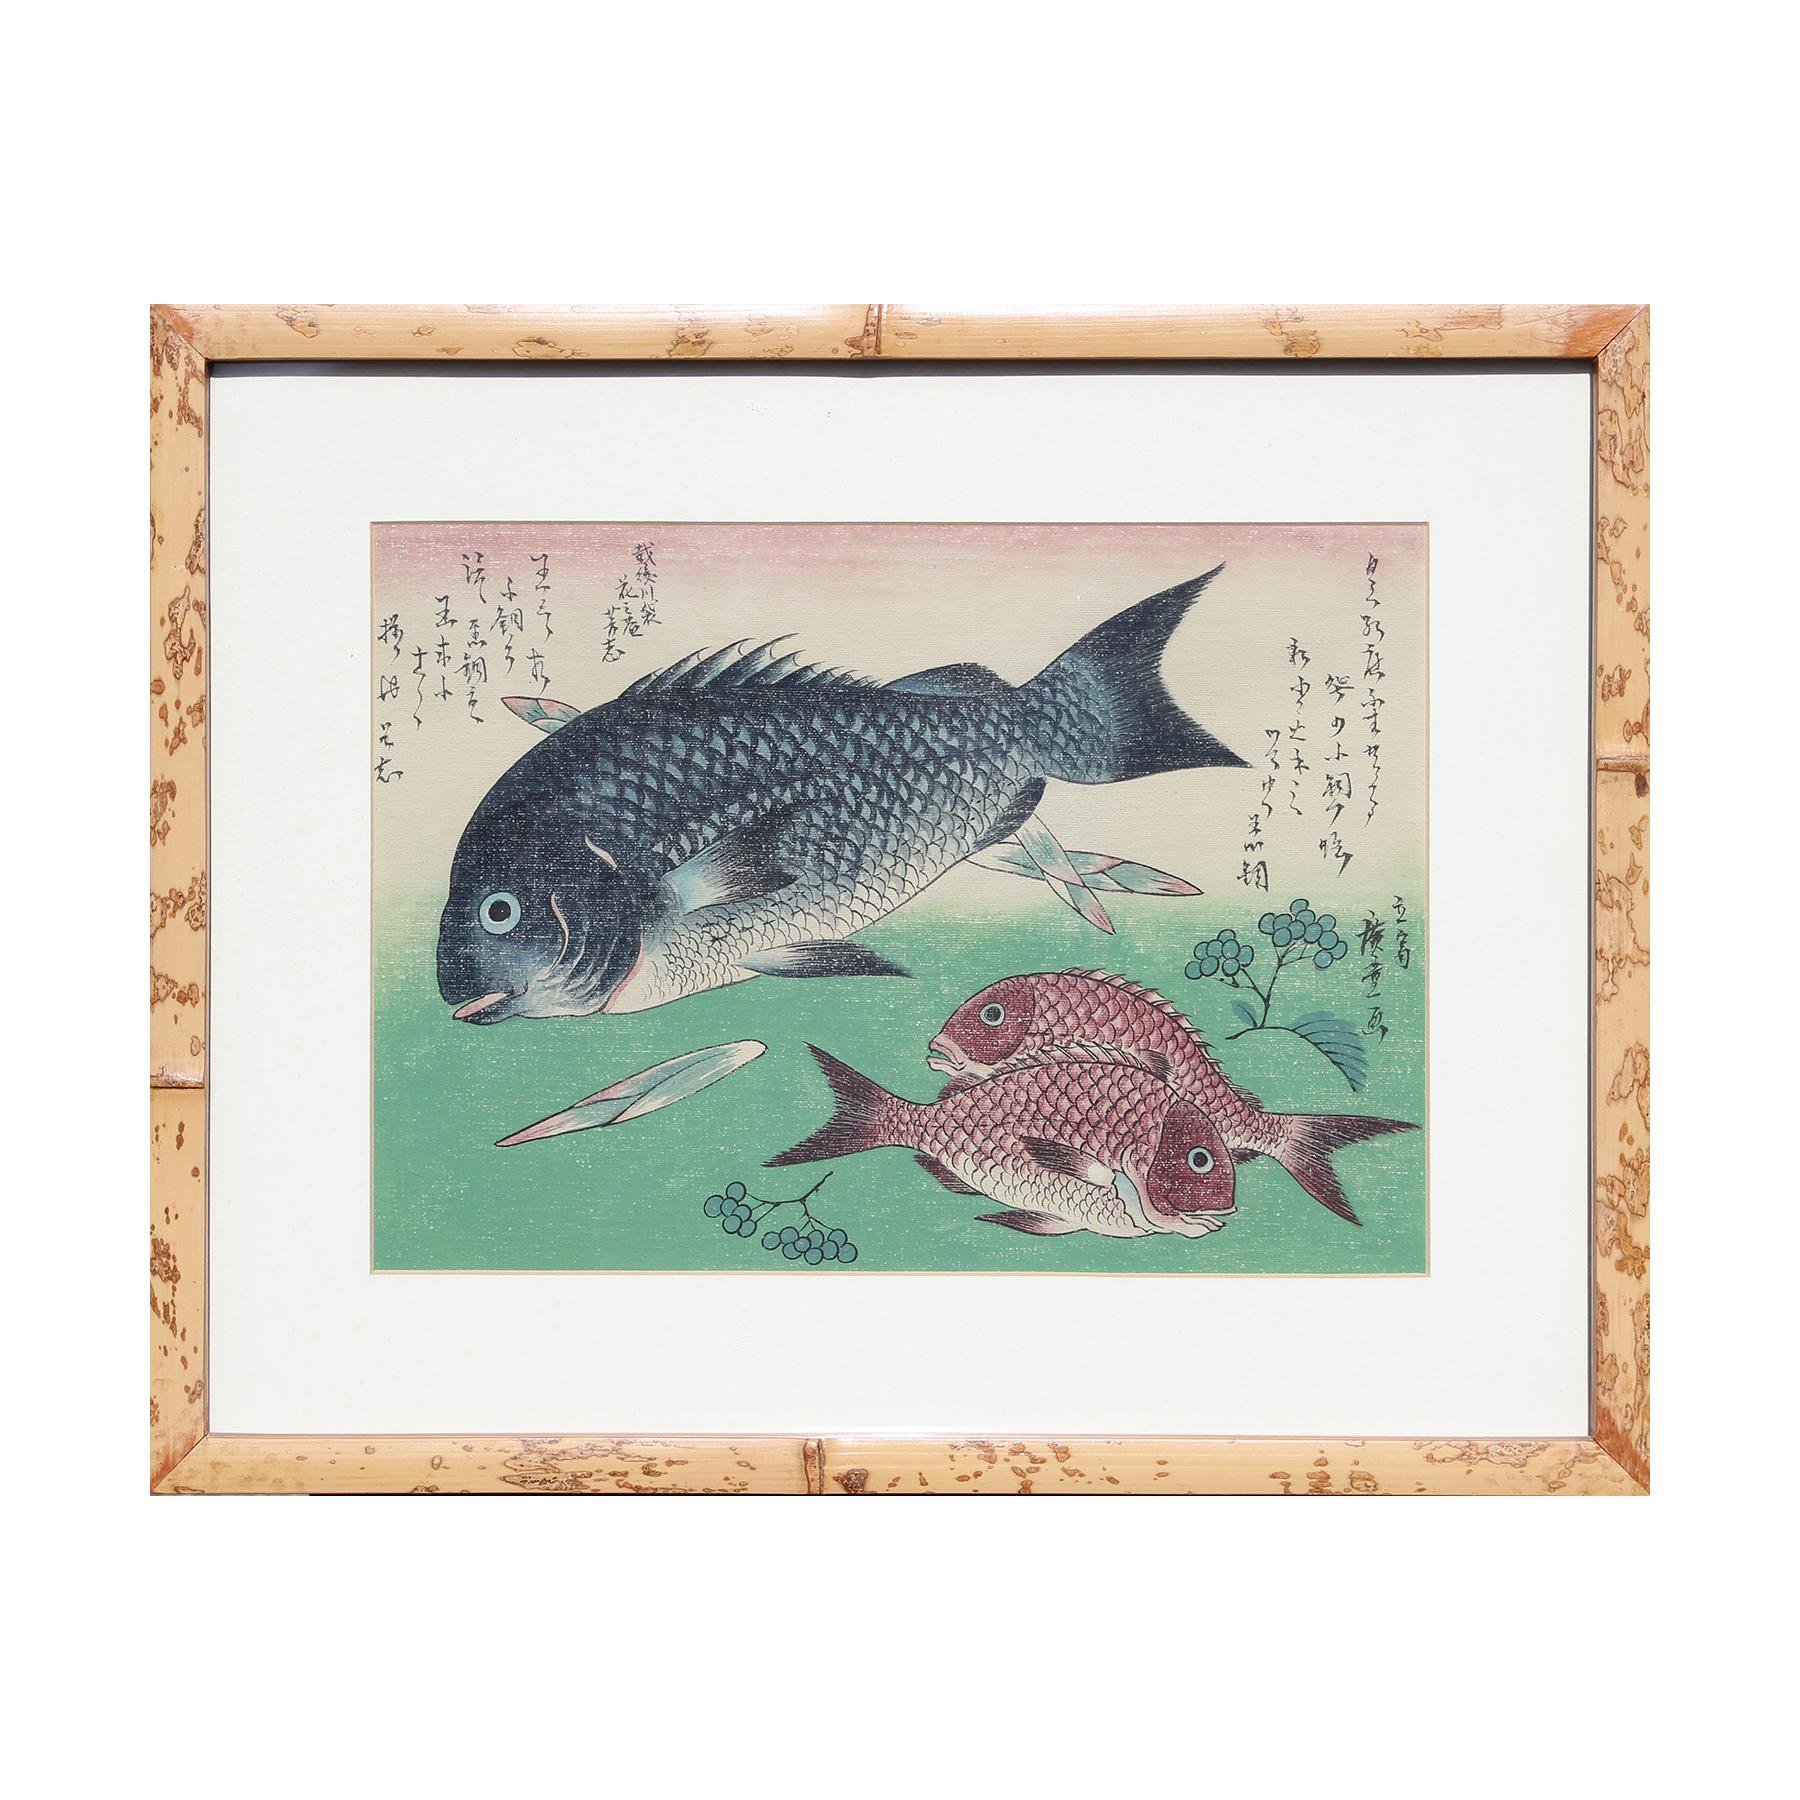 Utagawa Hiroshige (Ando Hiroshige) Animal Print - Kurodai & Kodai Fish with Bamboo Shoots and Berries, from the series Uozukushi